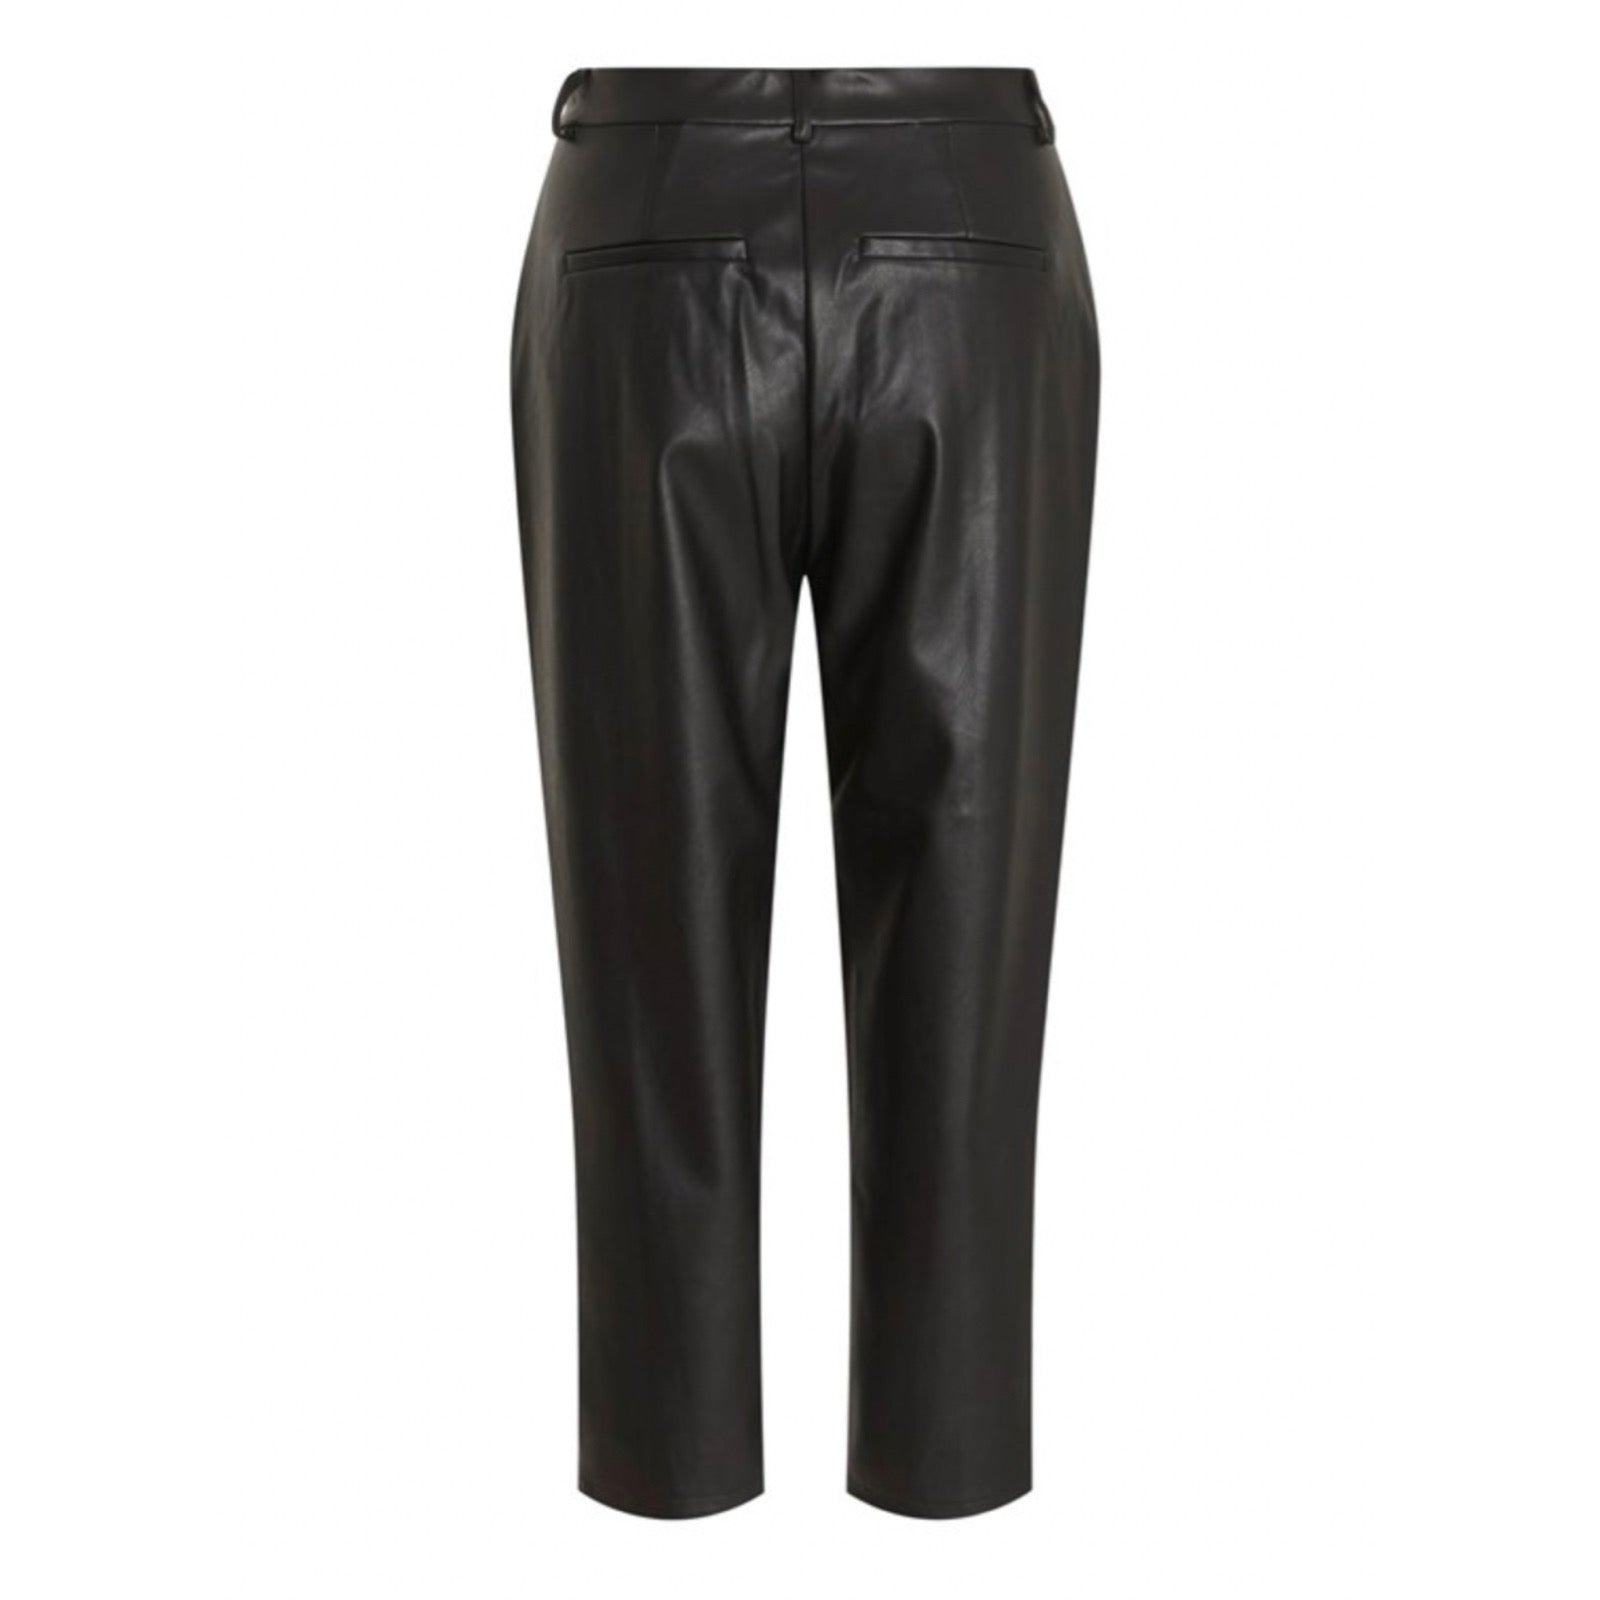 Berlin 7/8 faux leather trousers